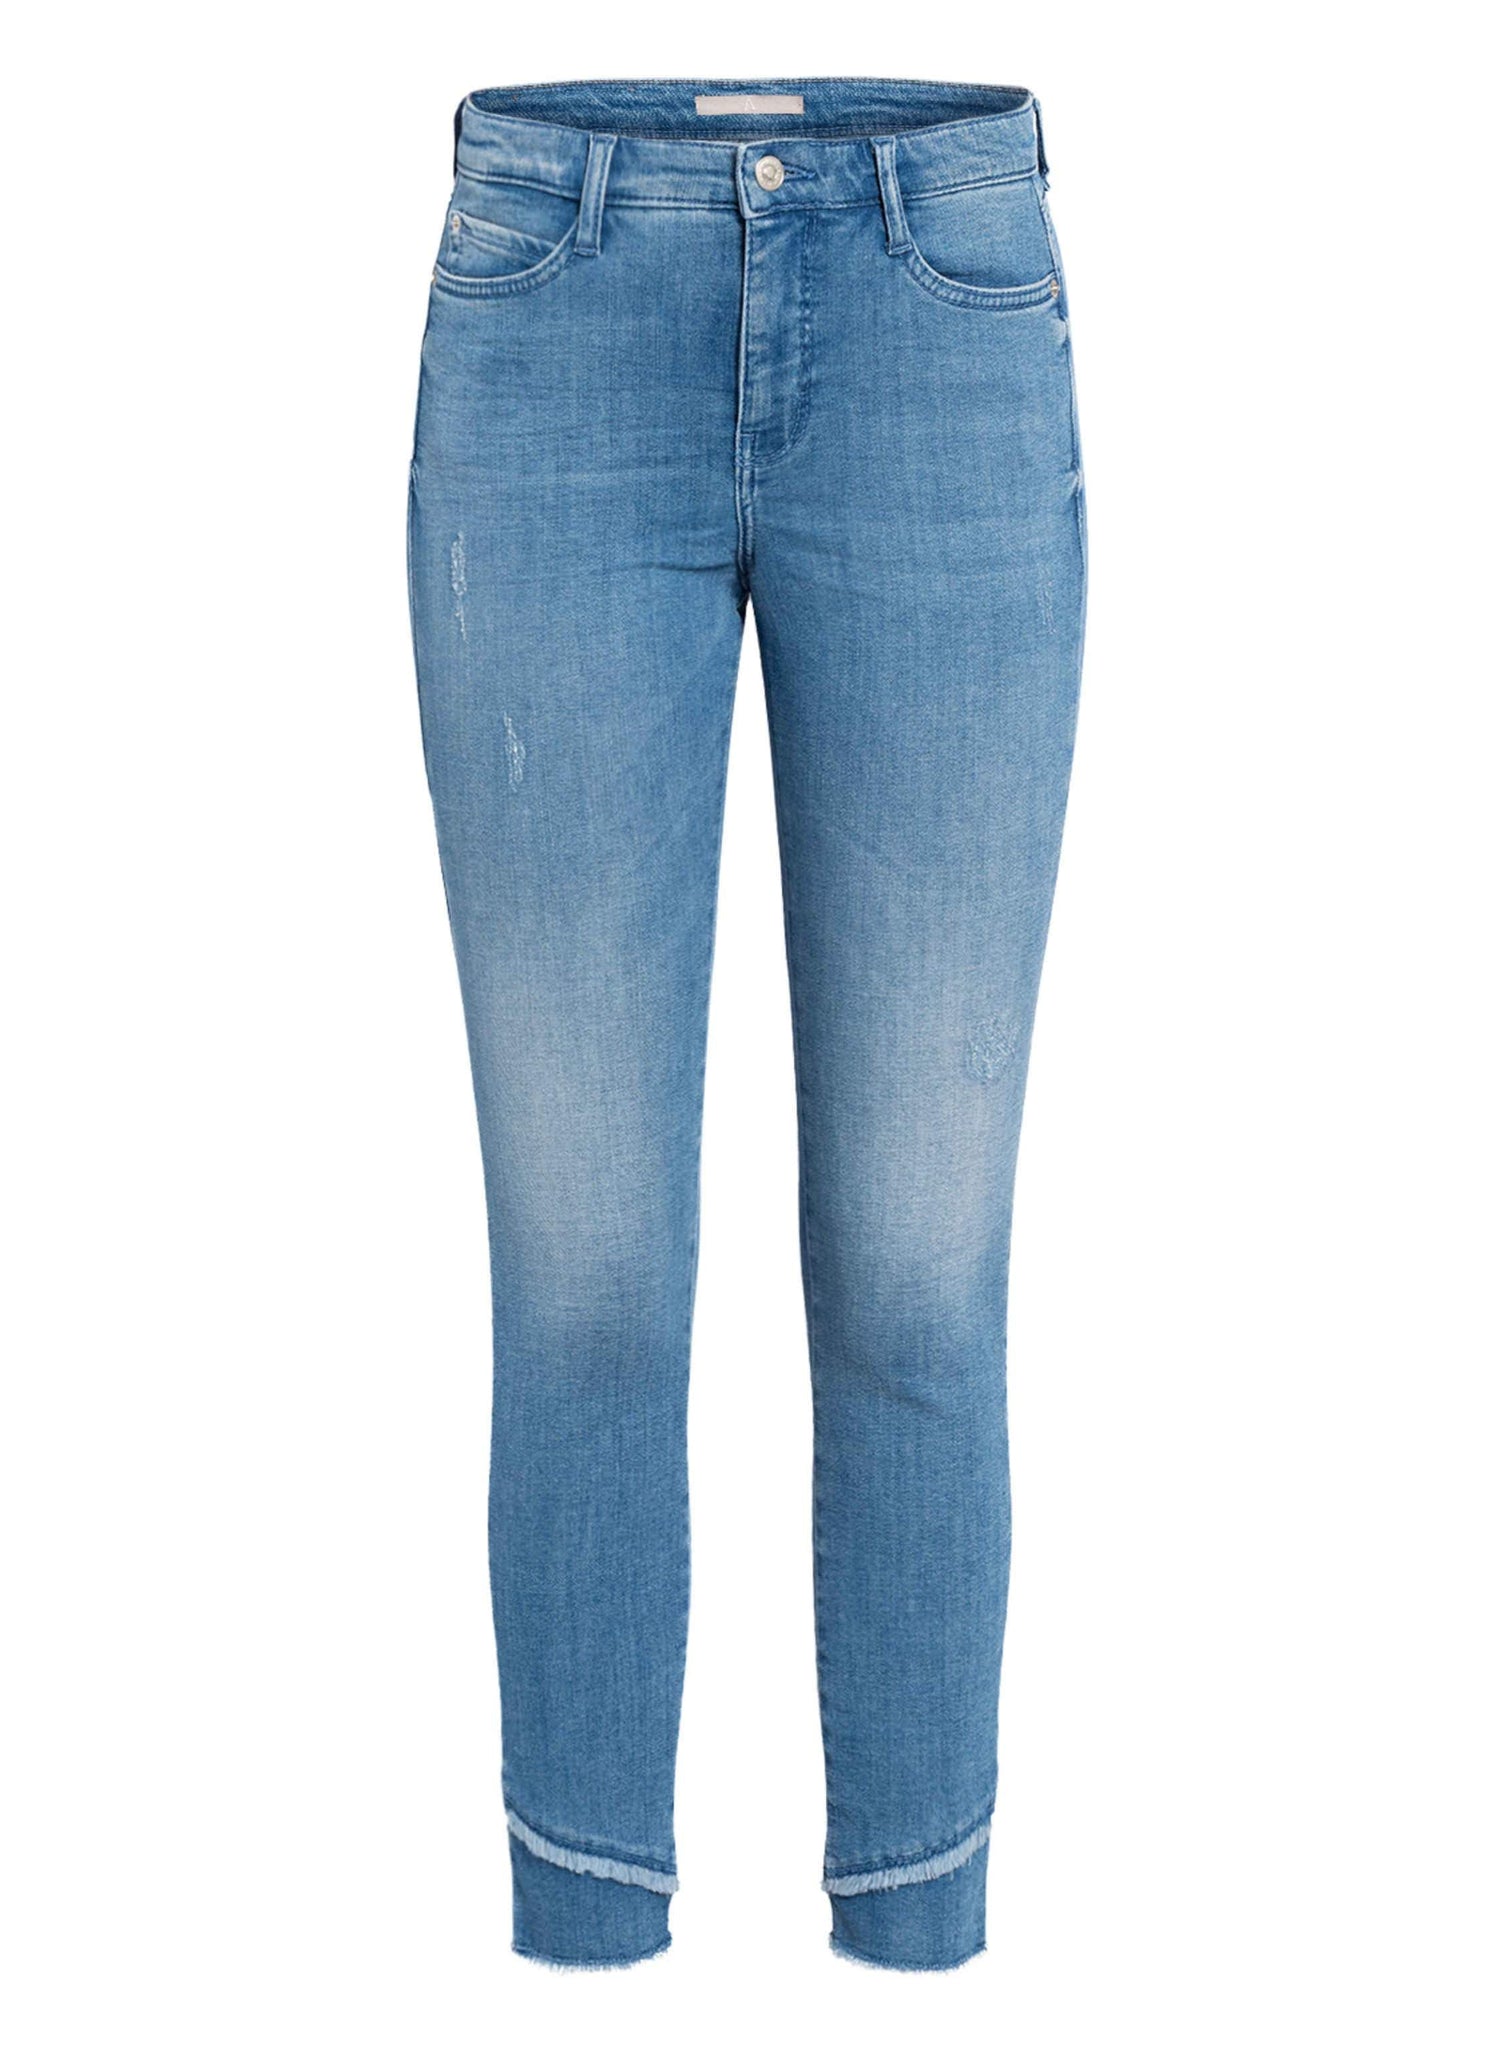 Mac Jeans Jeans Mac Day1.02 Skinny Double Fringe Jean 5938 D278 Pale Denim Blue izzi-of-baslow